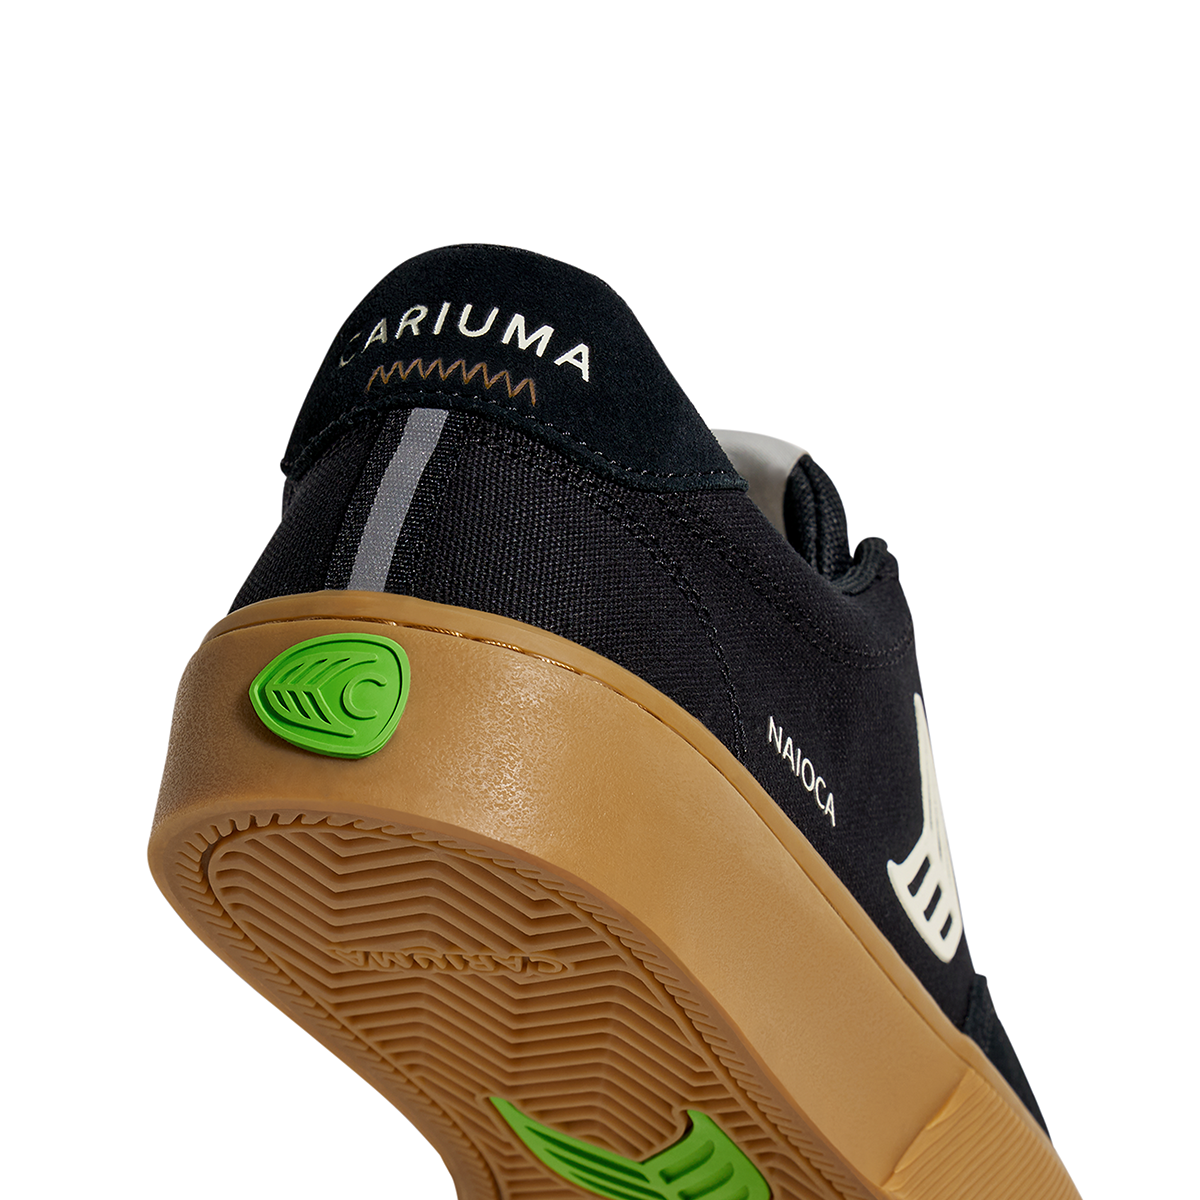 NAIOCA Pro Schuhe | Cariuma 